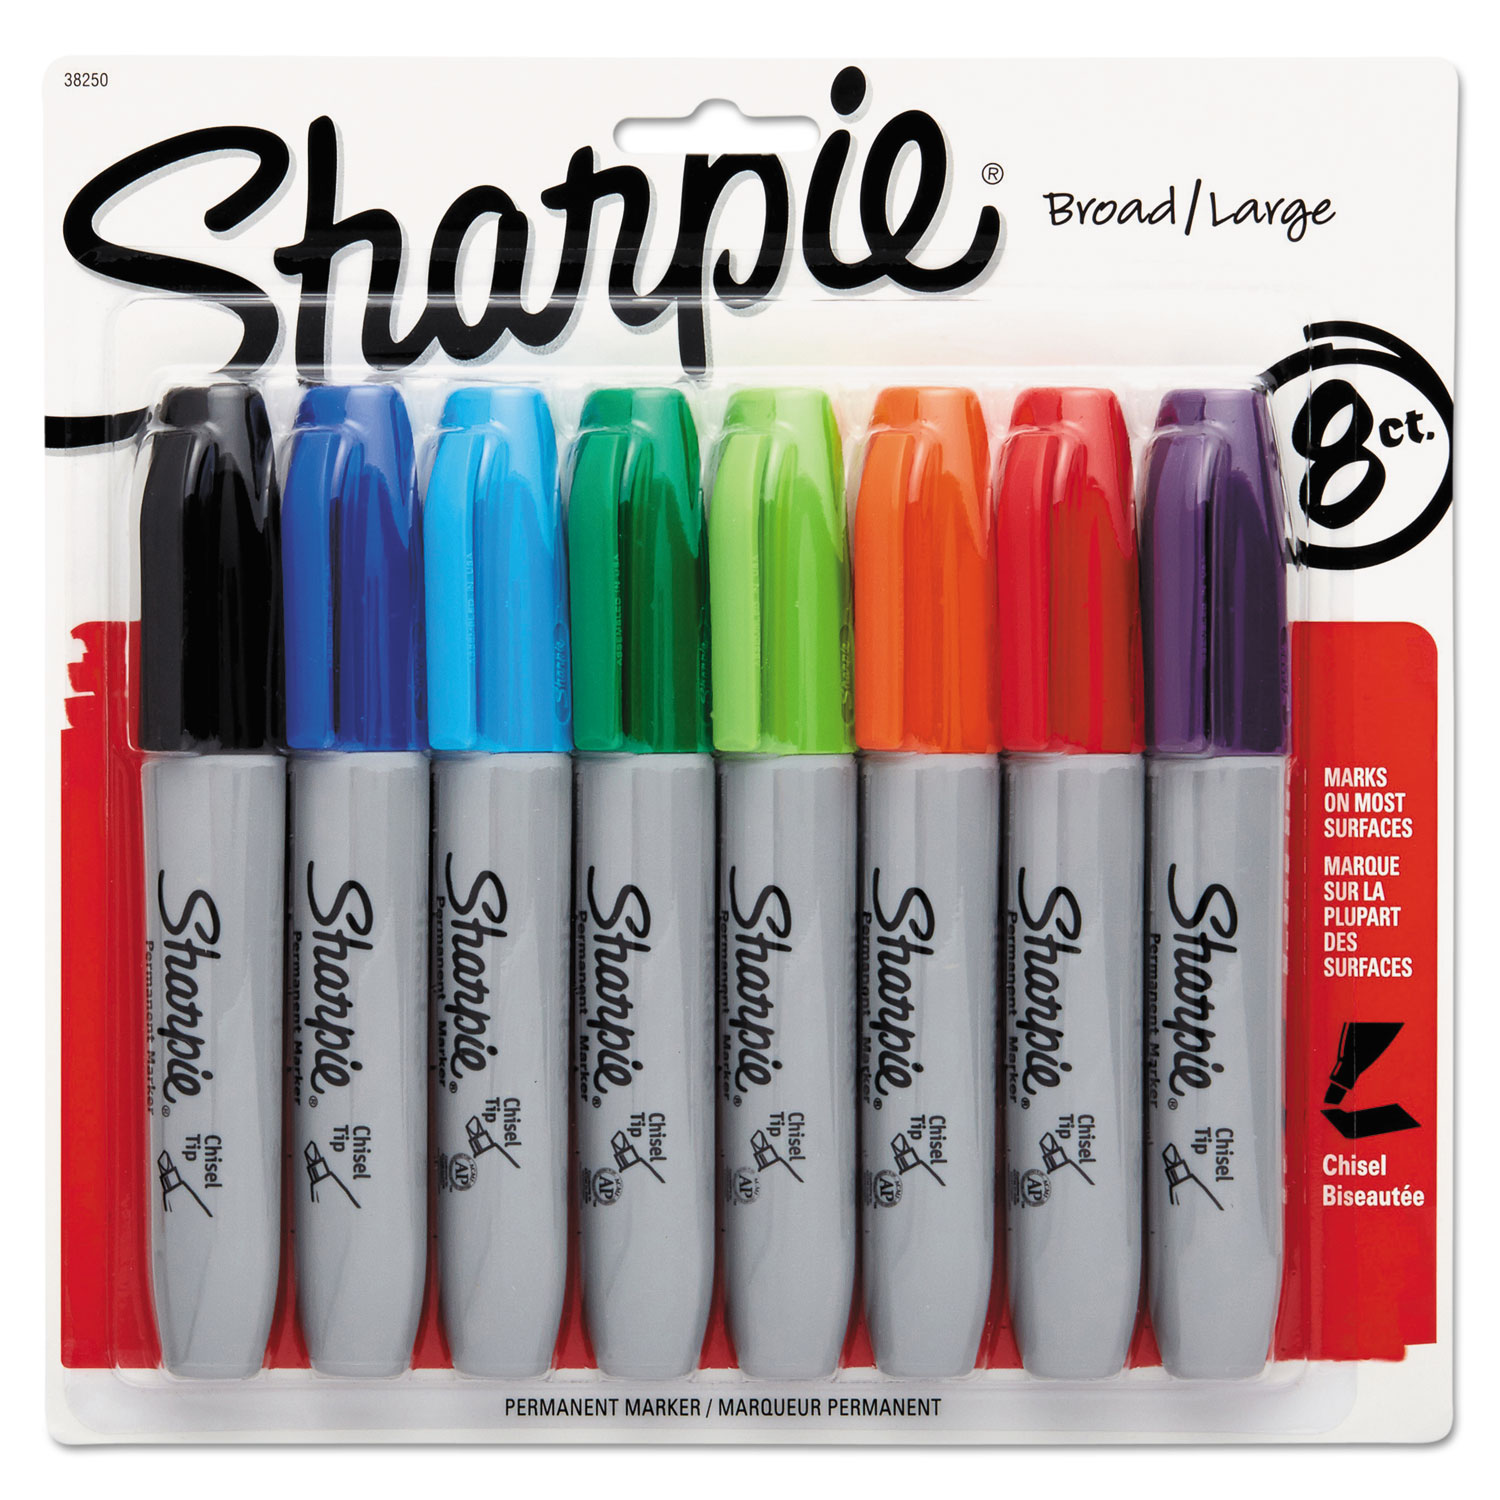 Sharpie Paint Oil-based Permanent Markers, Set of 6 Colors Fine